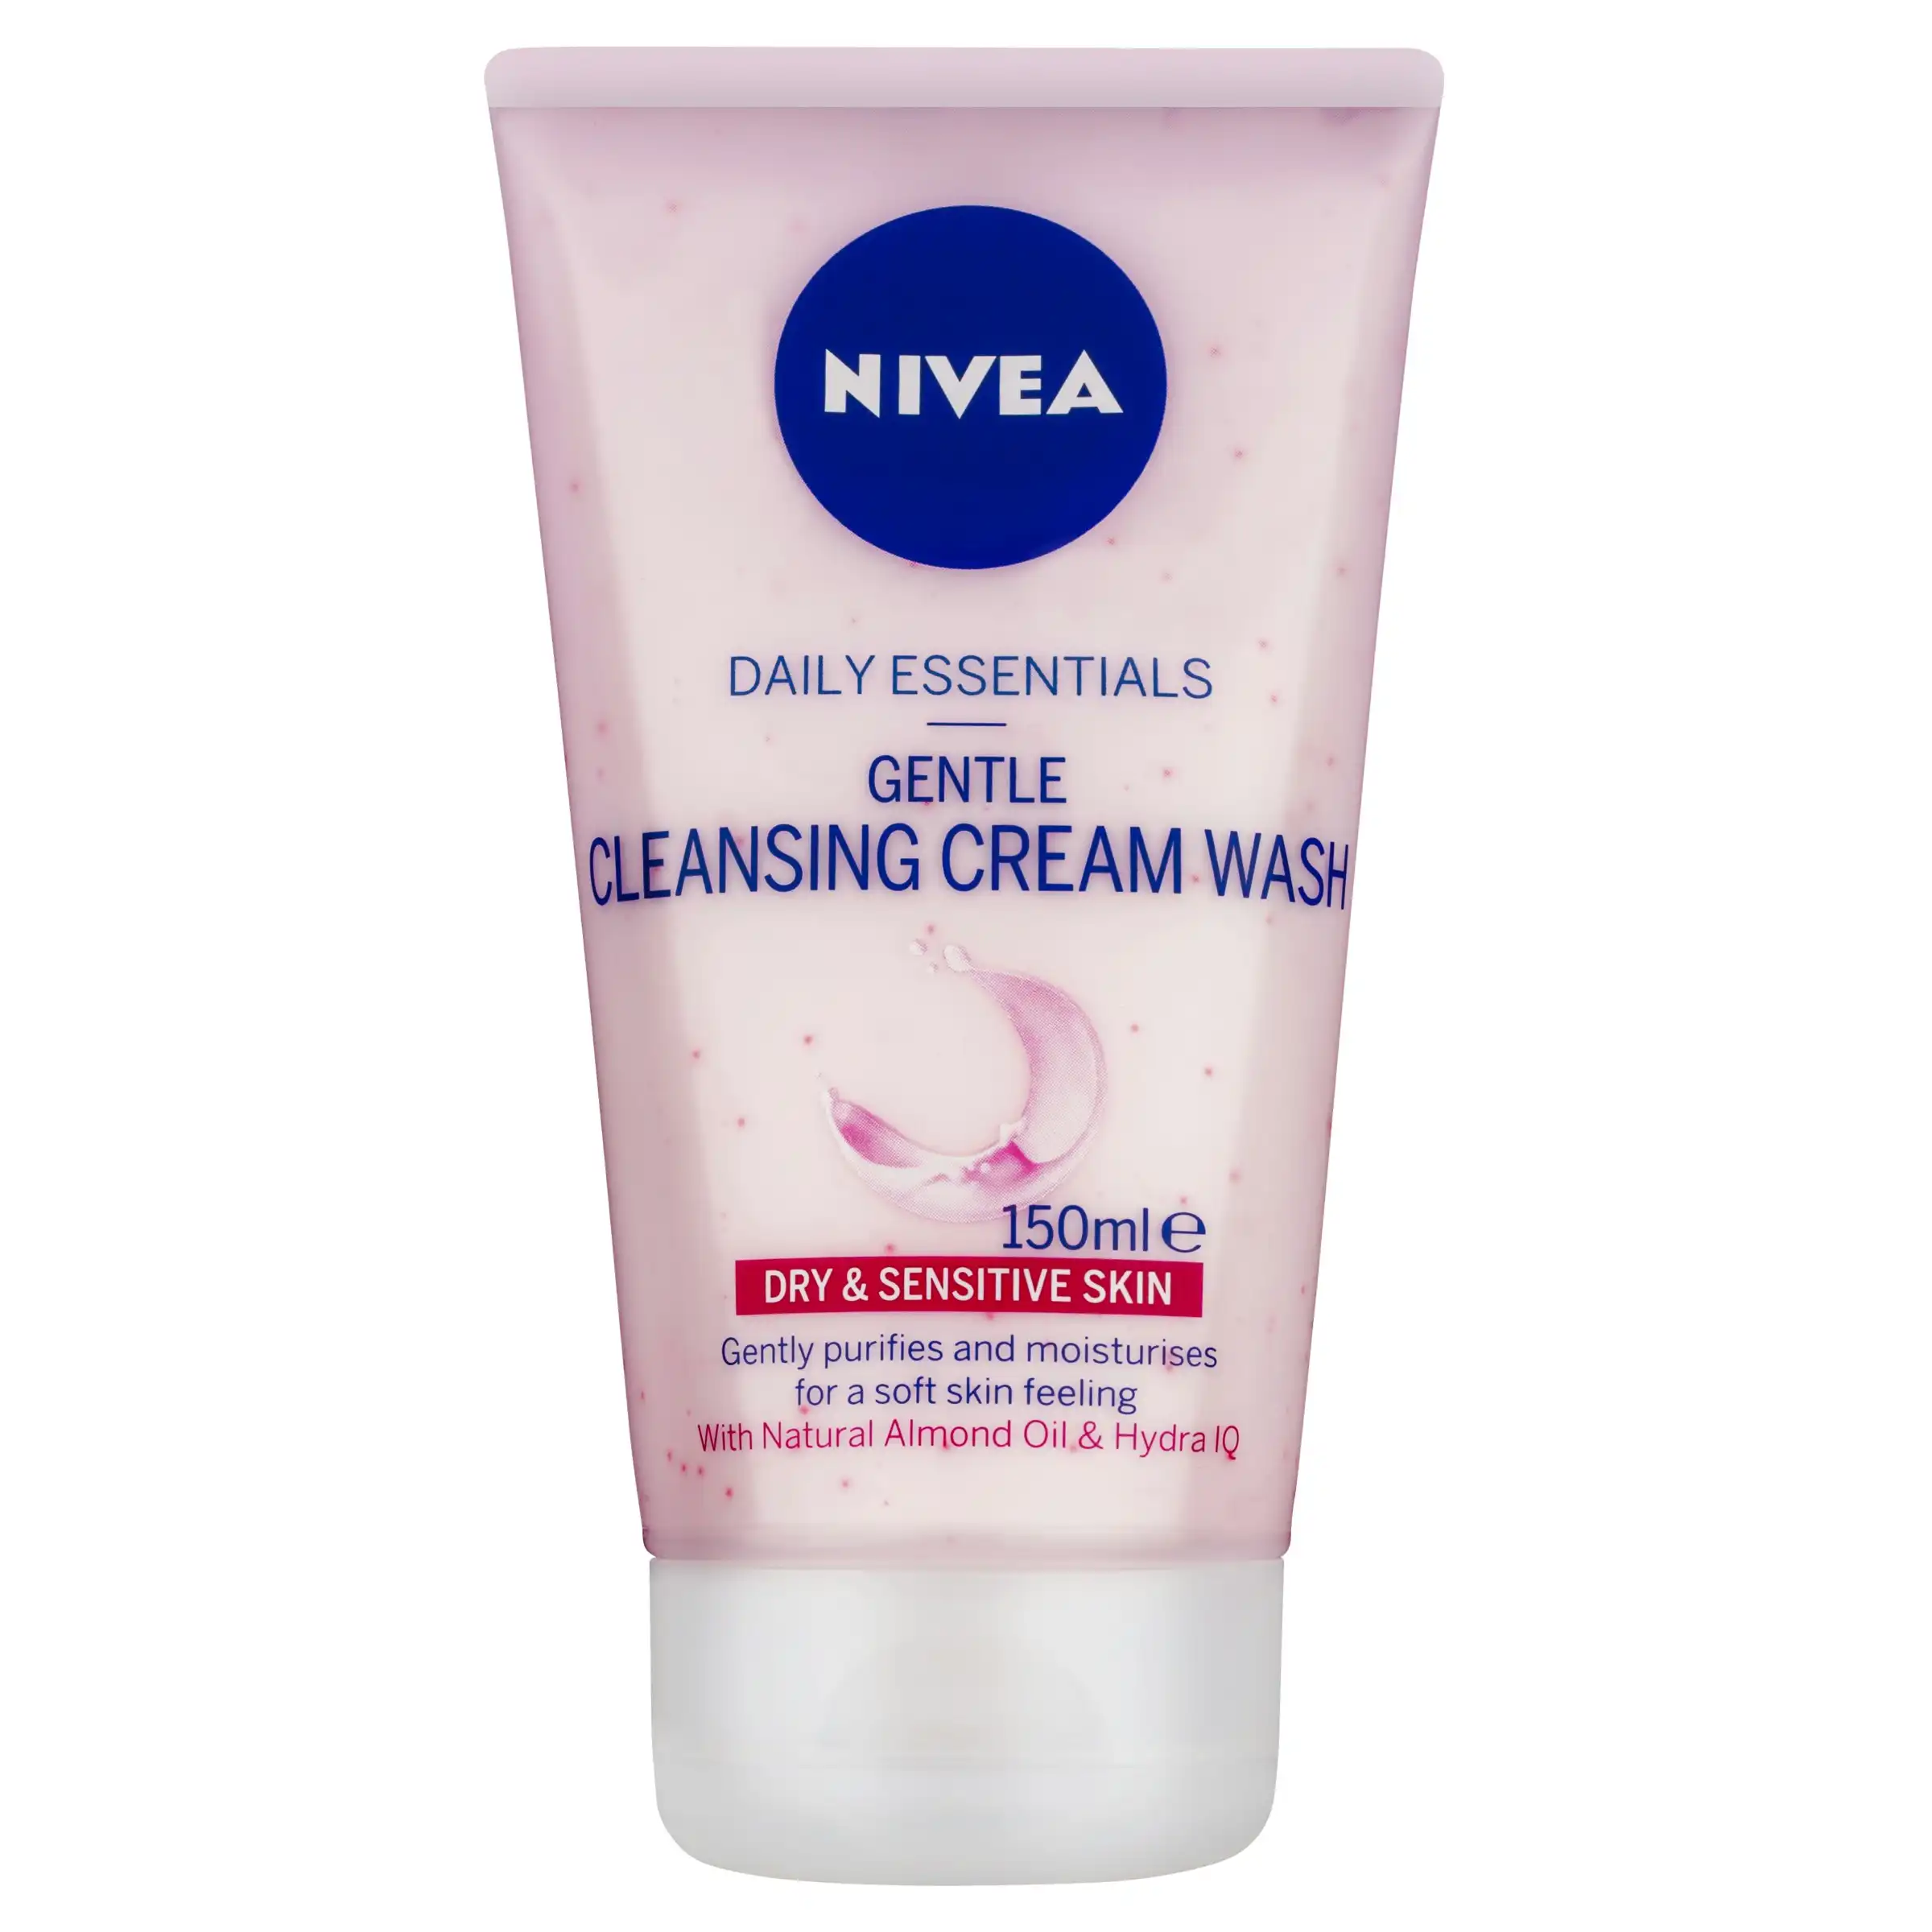 Nivea Daily Essentials Gentle Cleansing Wash Cream 150ml